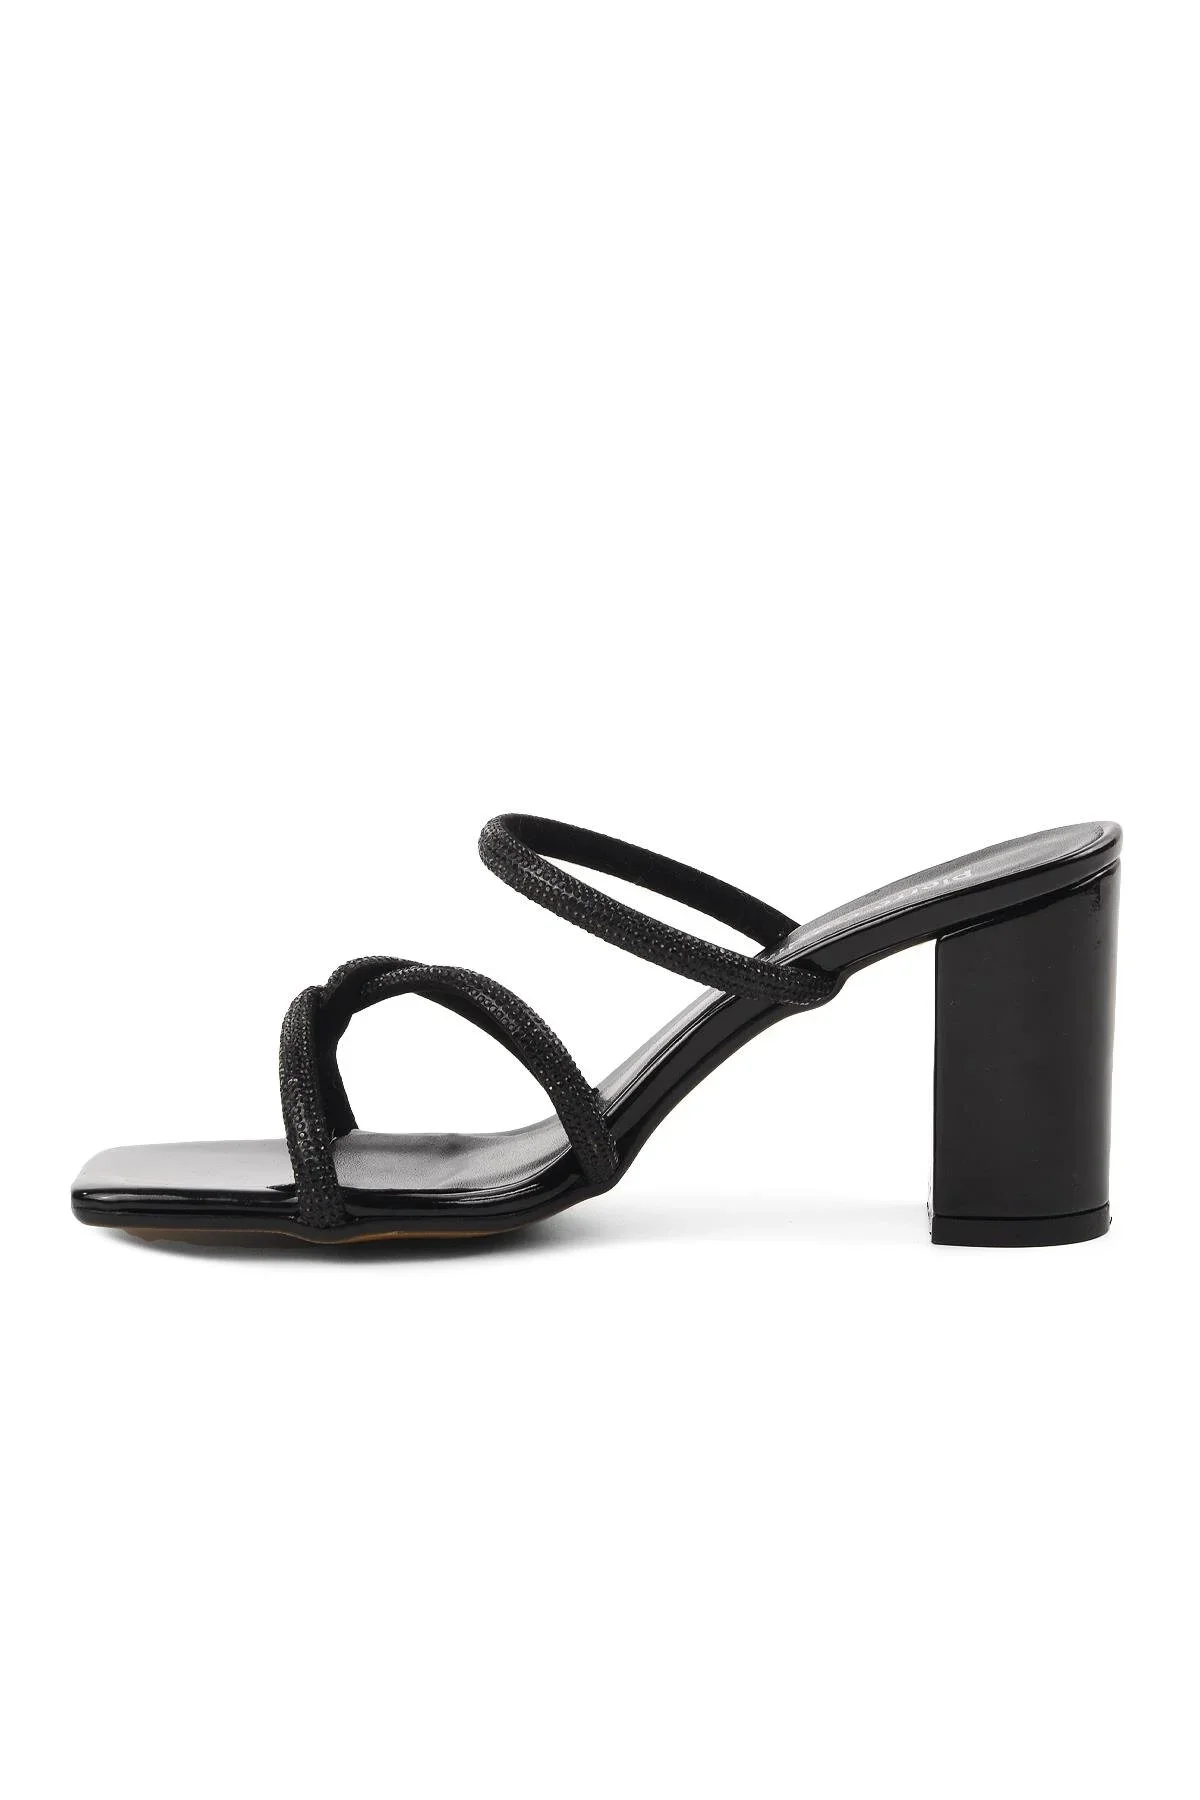 Kadın Topuklu Ayakkabı PC-52218-Siyah - 3